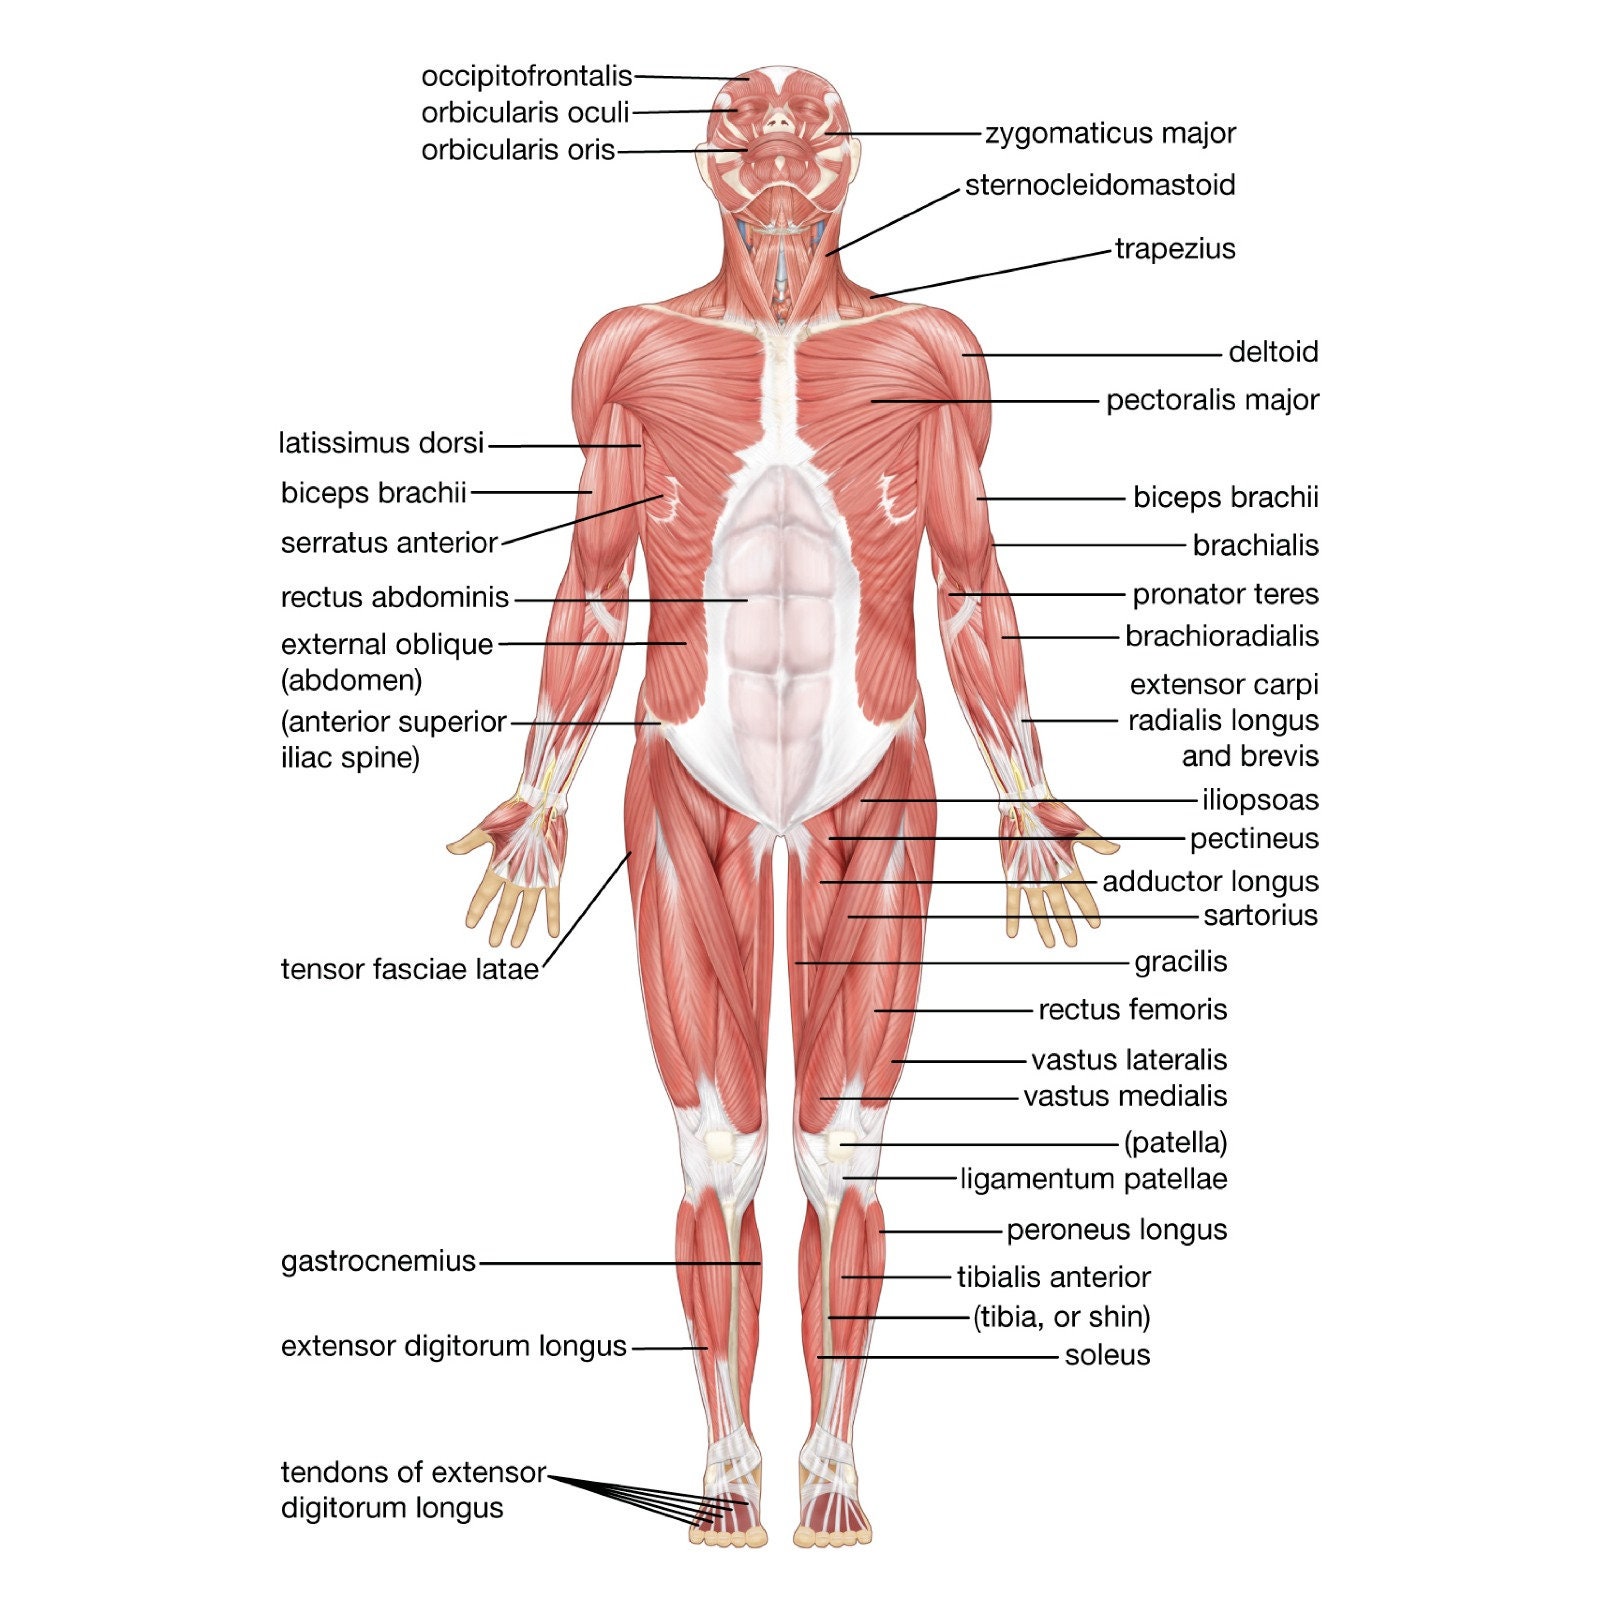 Système Musculaire 1pc Poster Anatomique Anatomie Anatomie Tableau